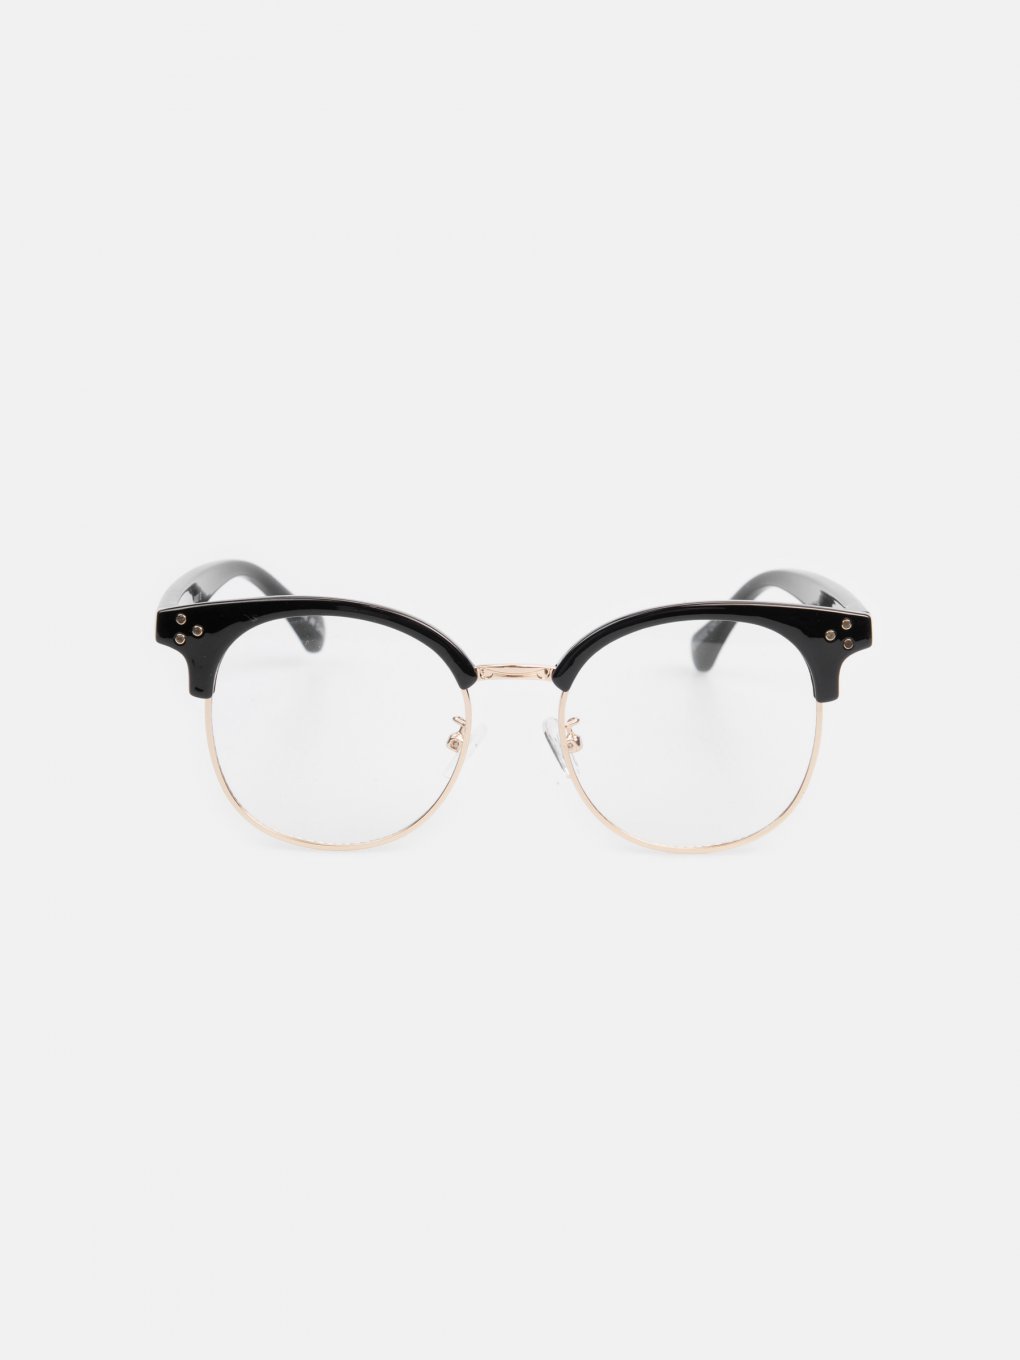 Transparent lenses glasses